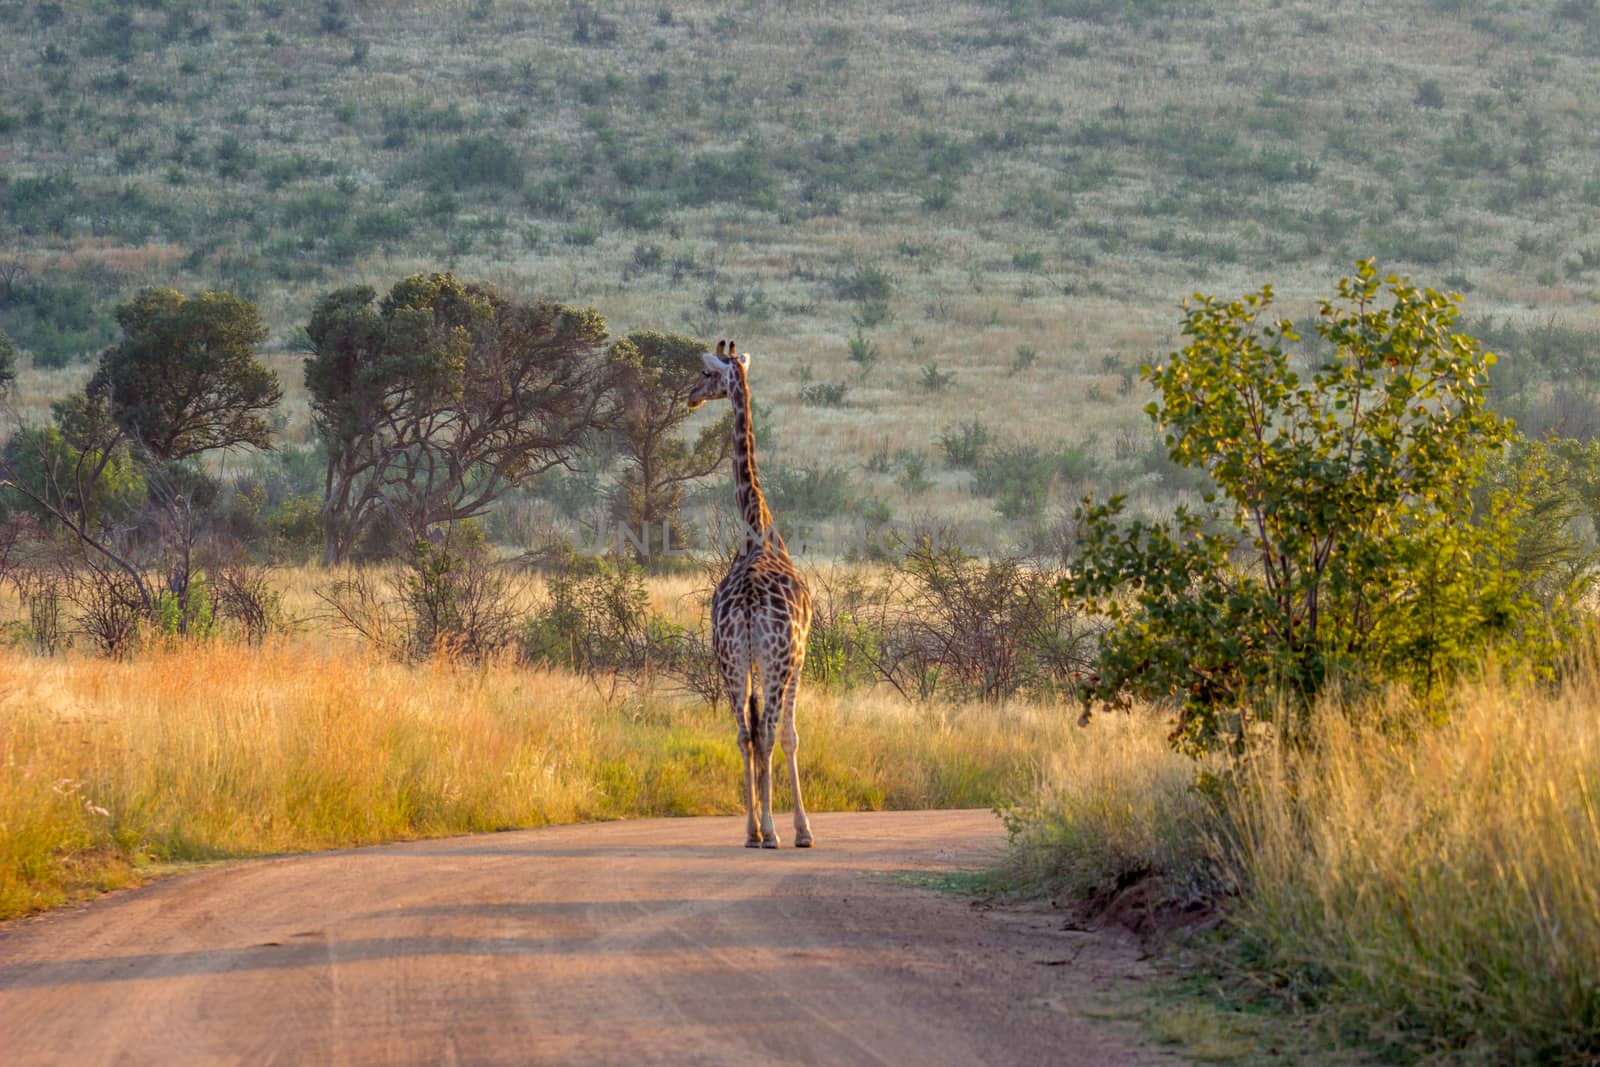 Giraffe standing in the road by RiaanAlbrecht